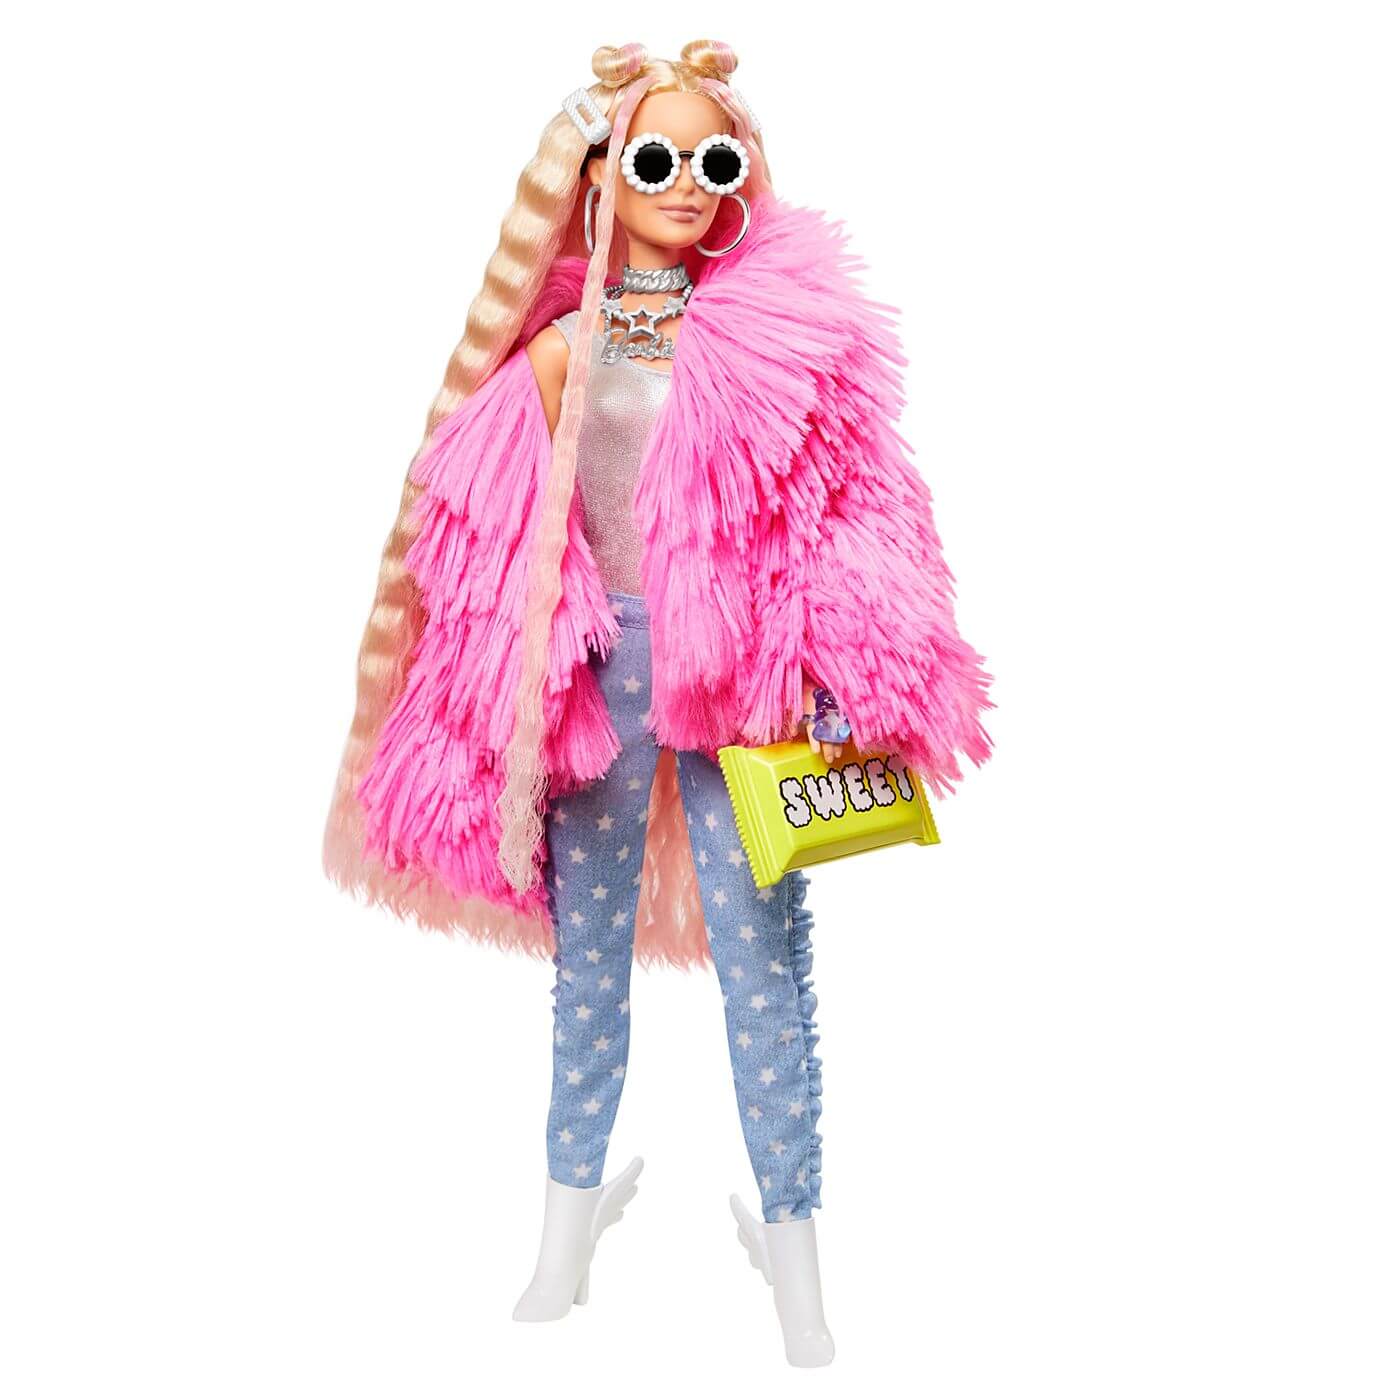 Barbie Extra 3 Abrigo Rosa con Cerdo-Unicornio ( Mattel GRN28 ) imagen b